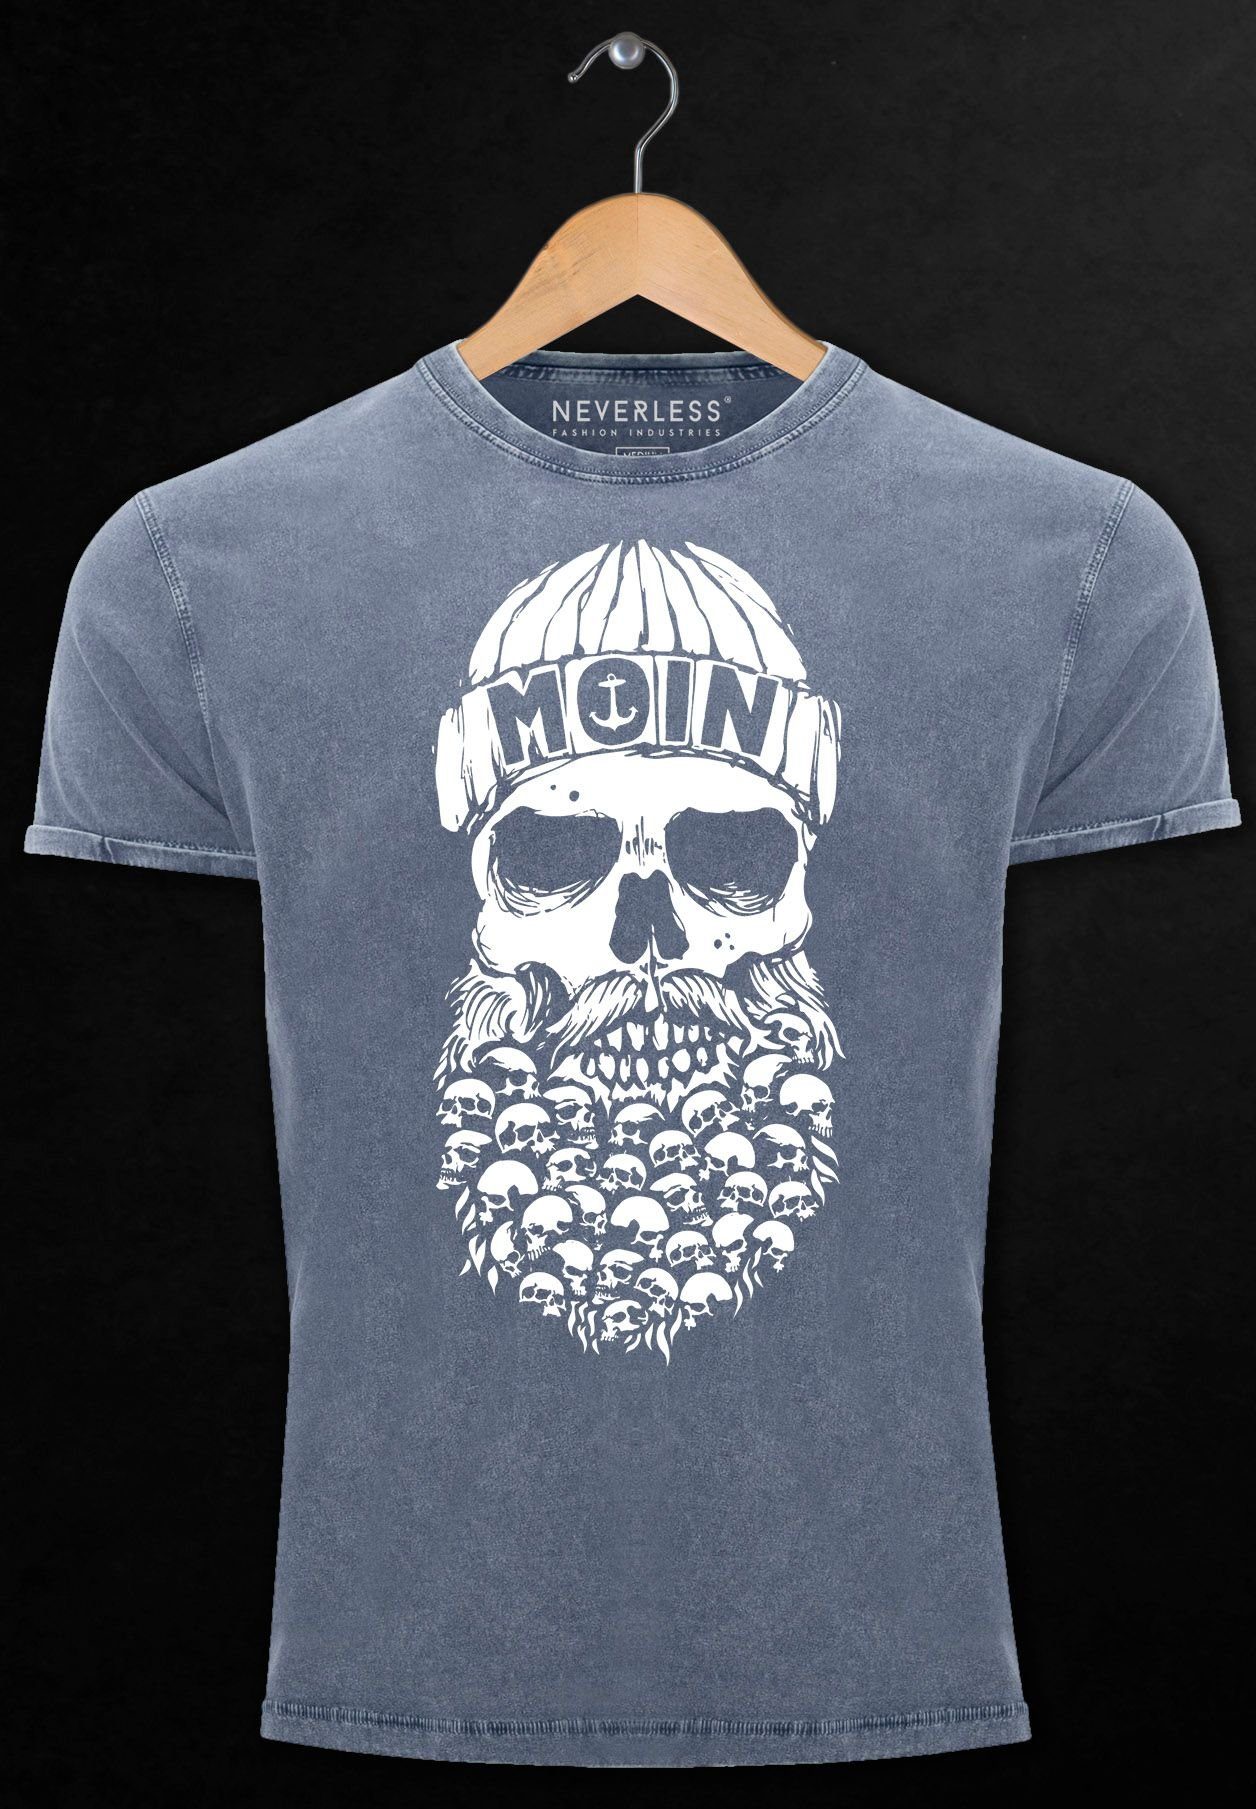 Neverless Print-Shirt Herren Vintage Hamburg Shirt blau mit Skull Ank Print Moin Totenkopf Dialekt Nordisch